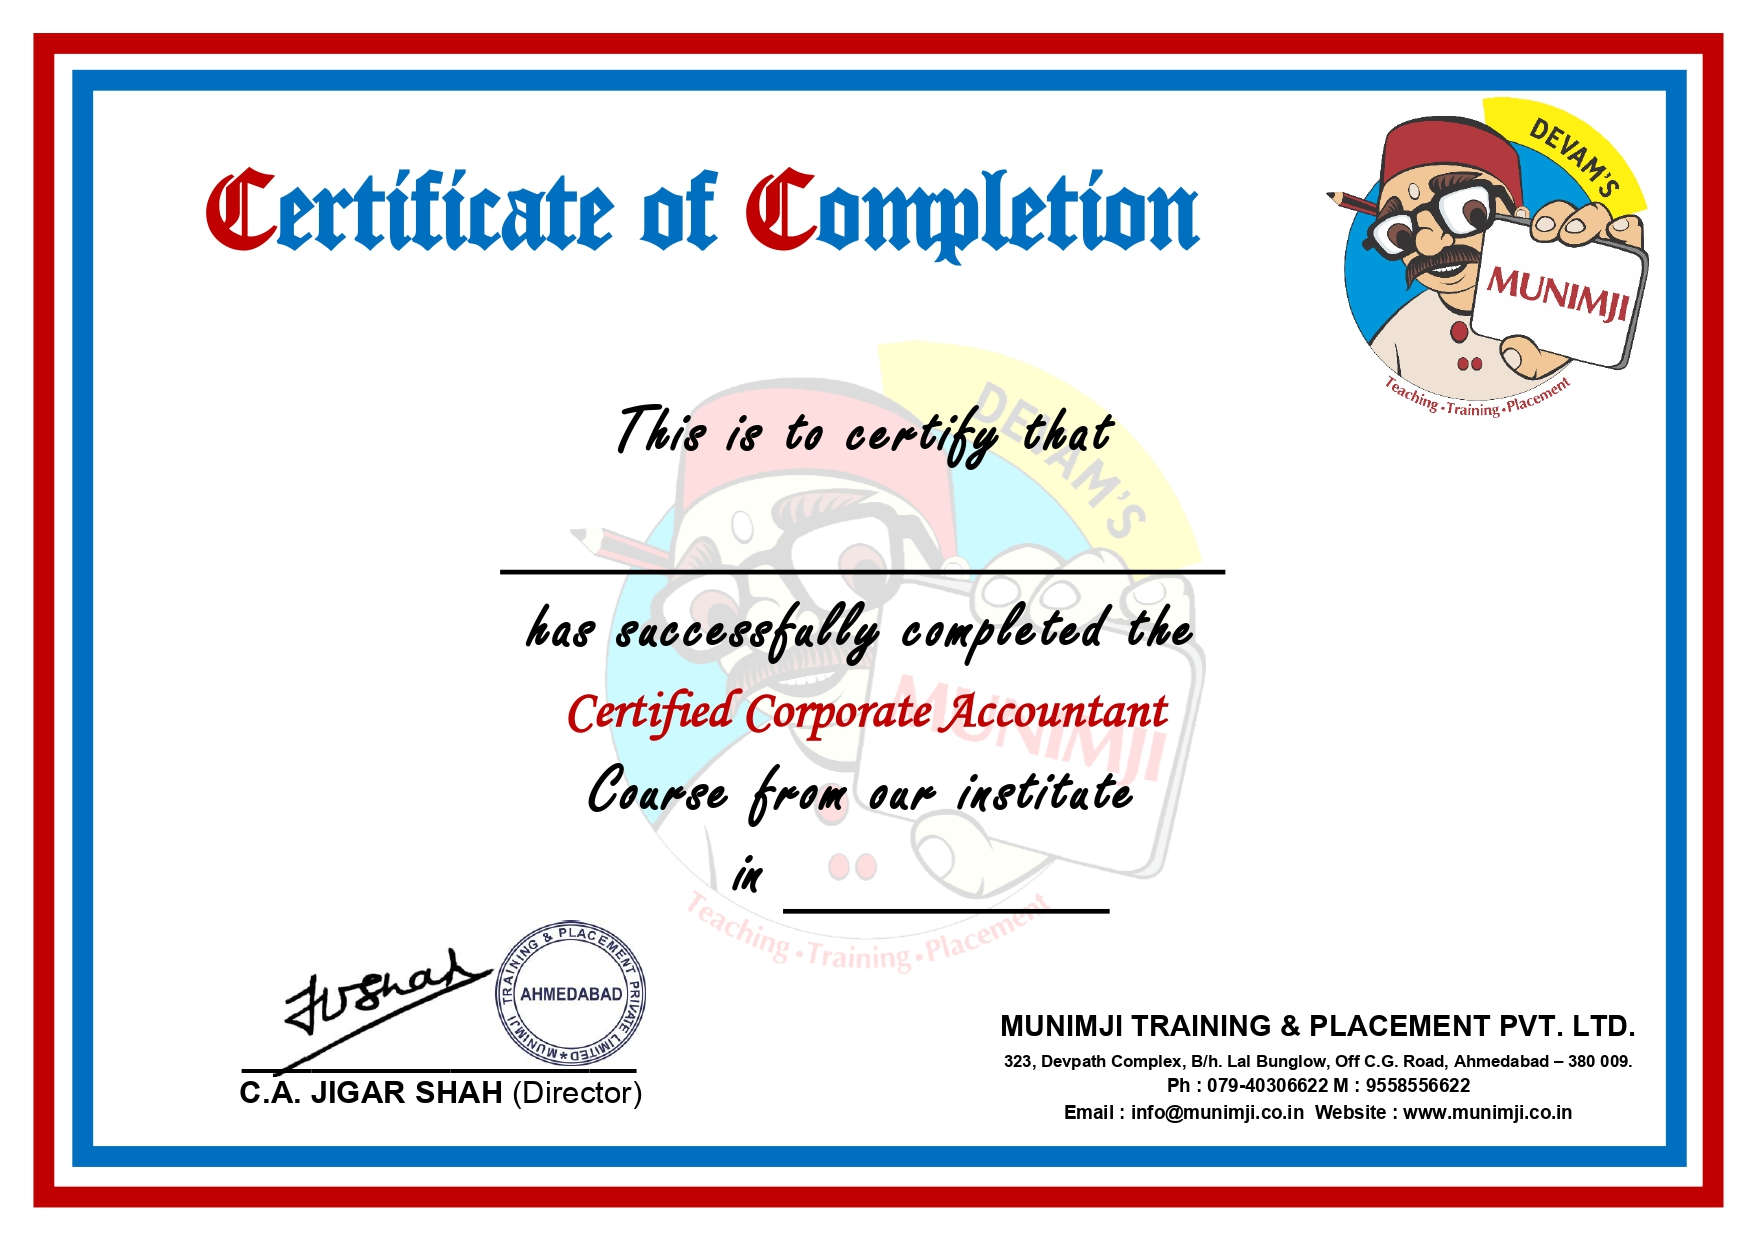 Munimji’s Certification